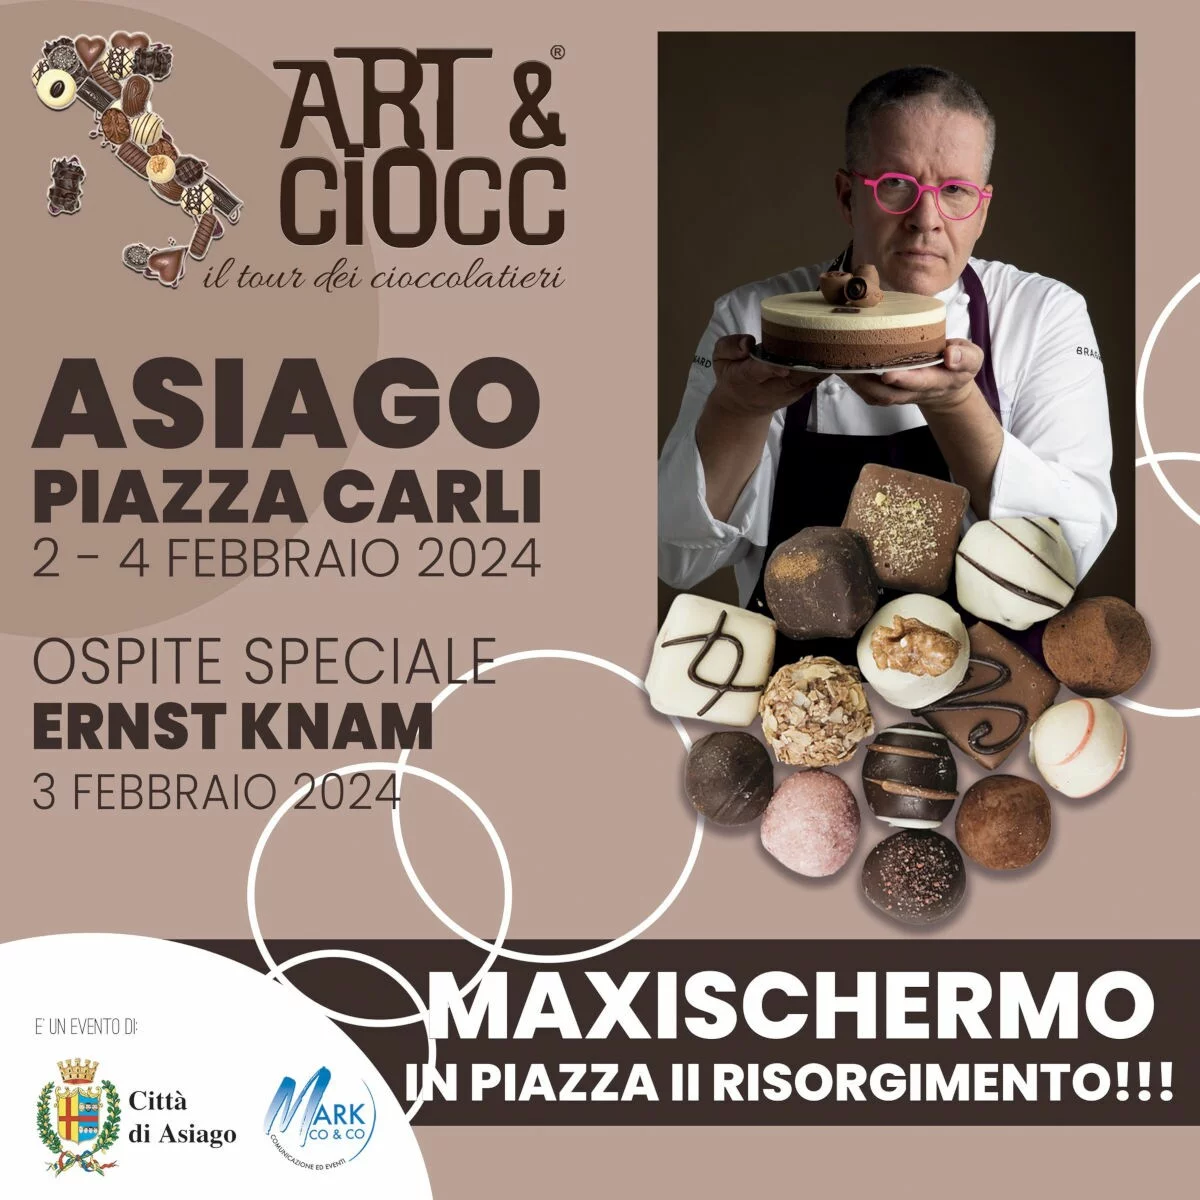 ART & CIOCC Il Tour dei Cioccolatieri - Asiago